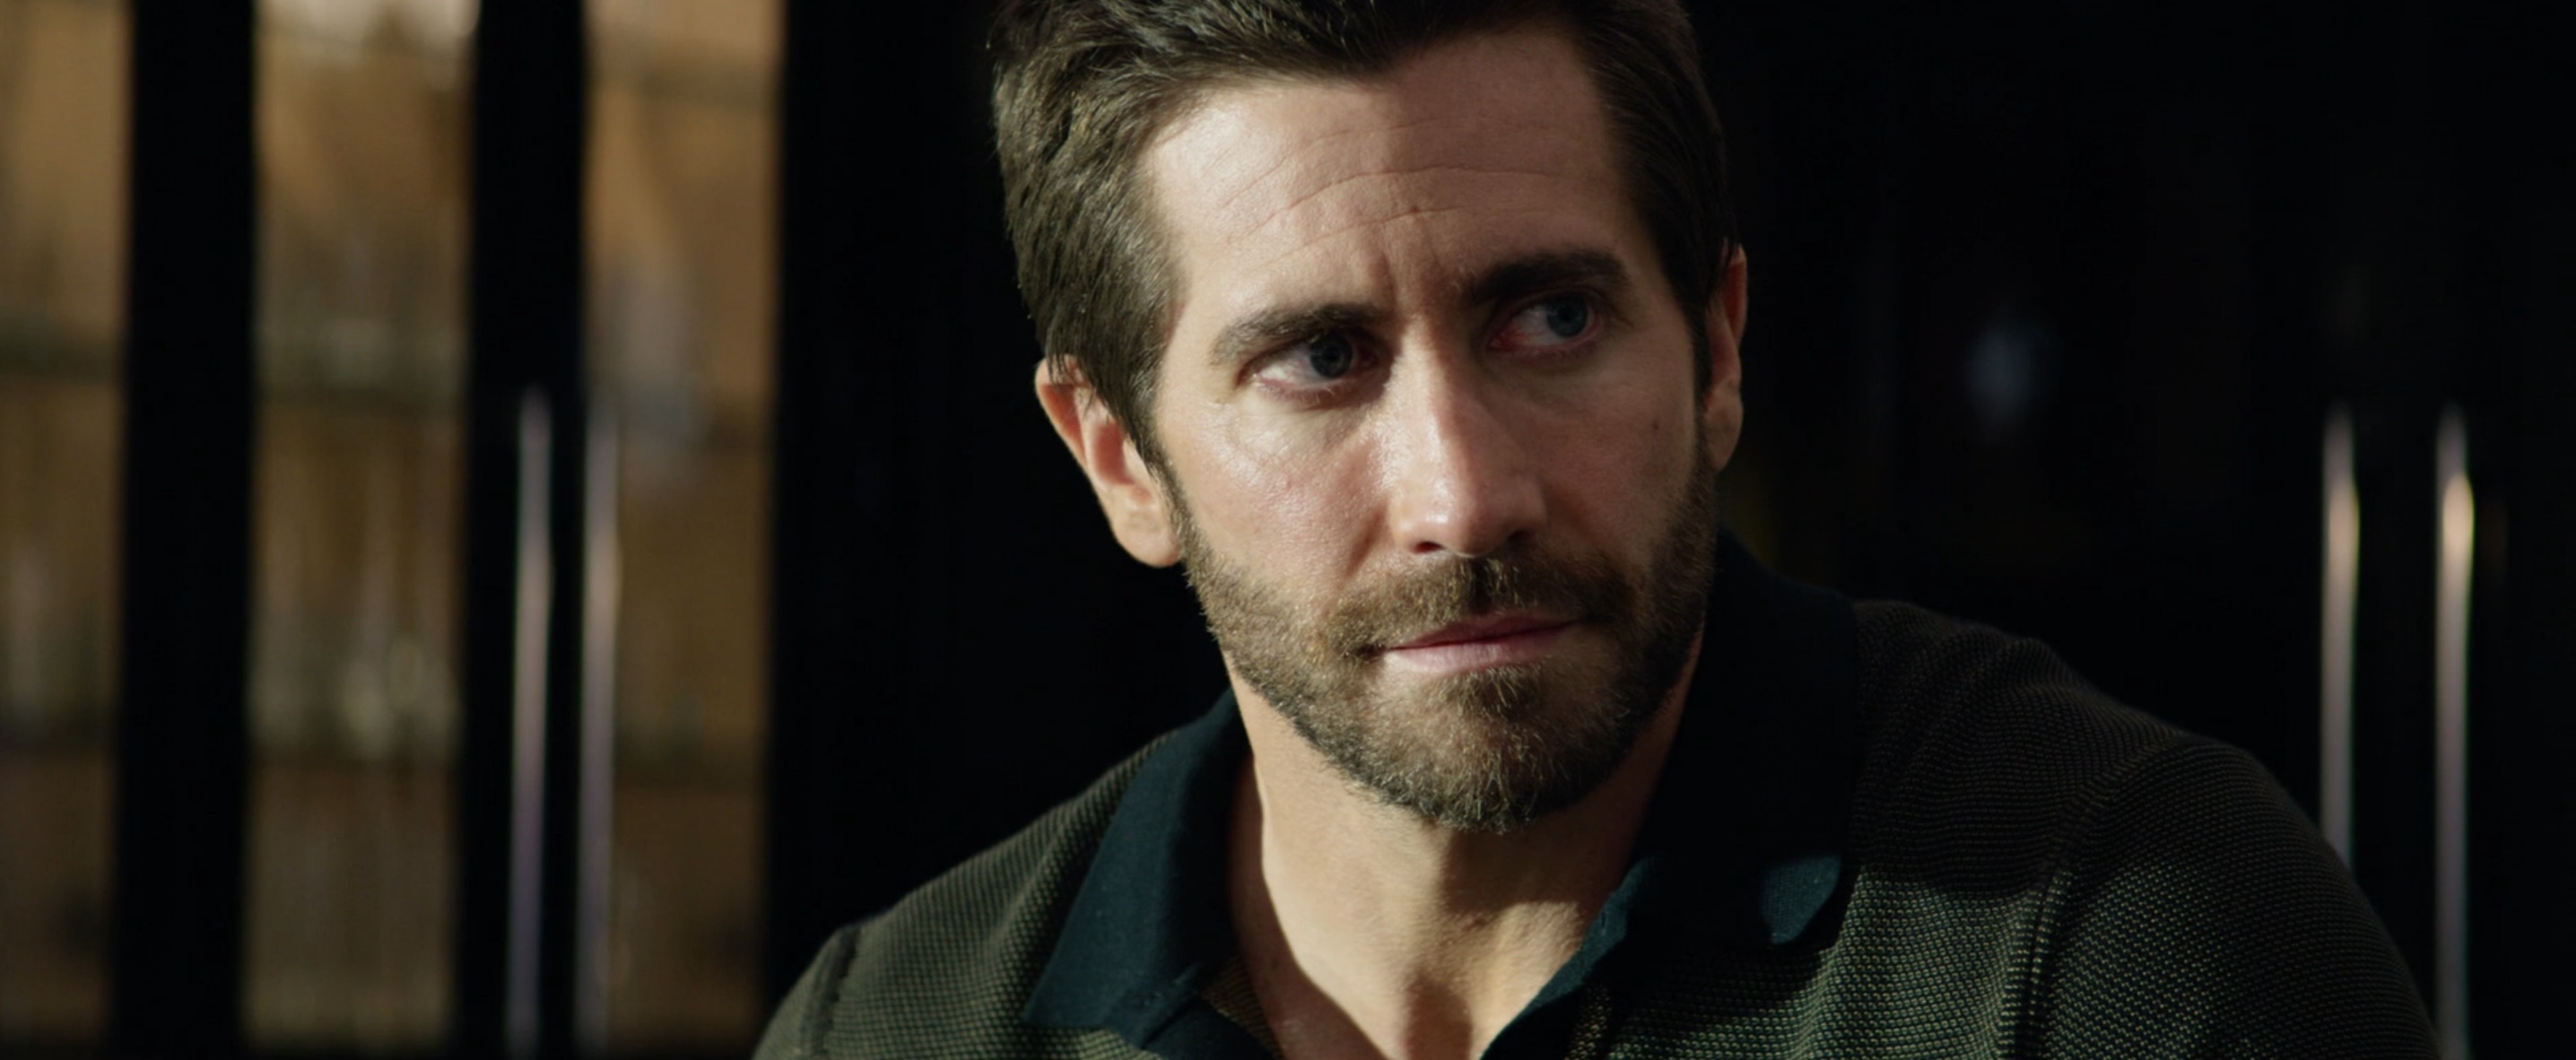 Ambulance Cast - Jake Gyllenhaal as Danny Sharp